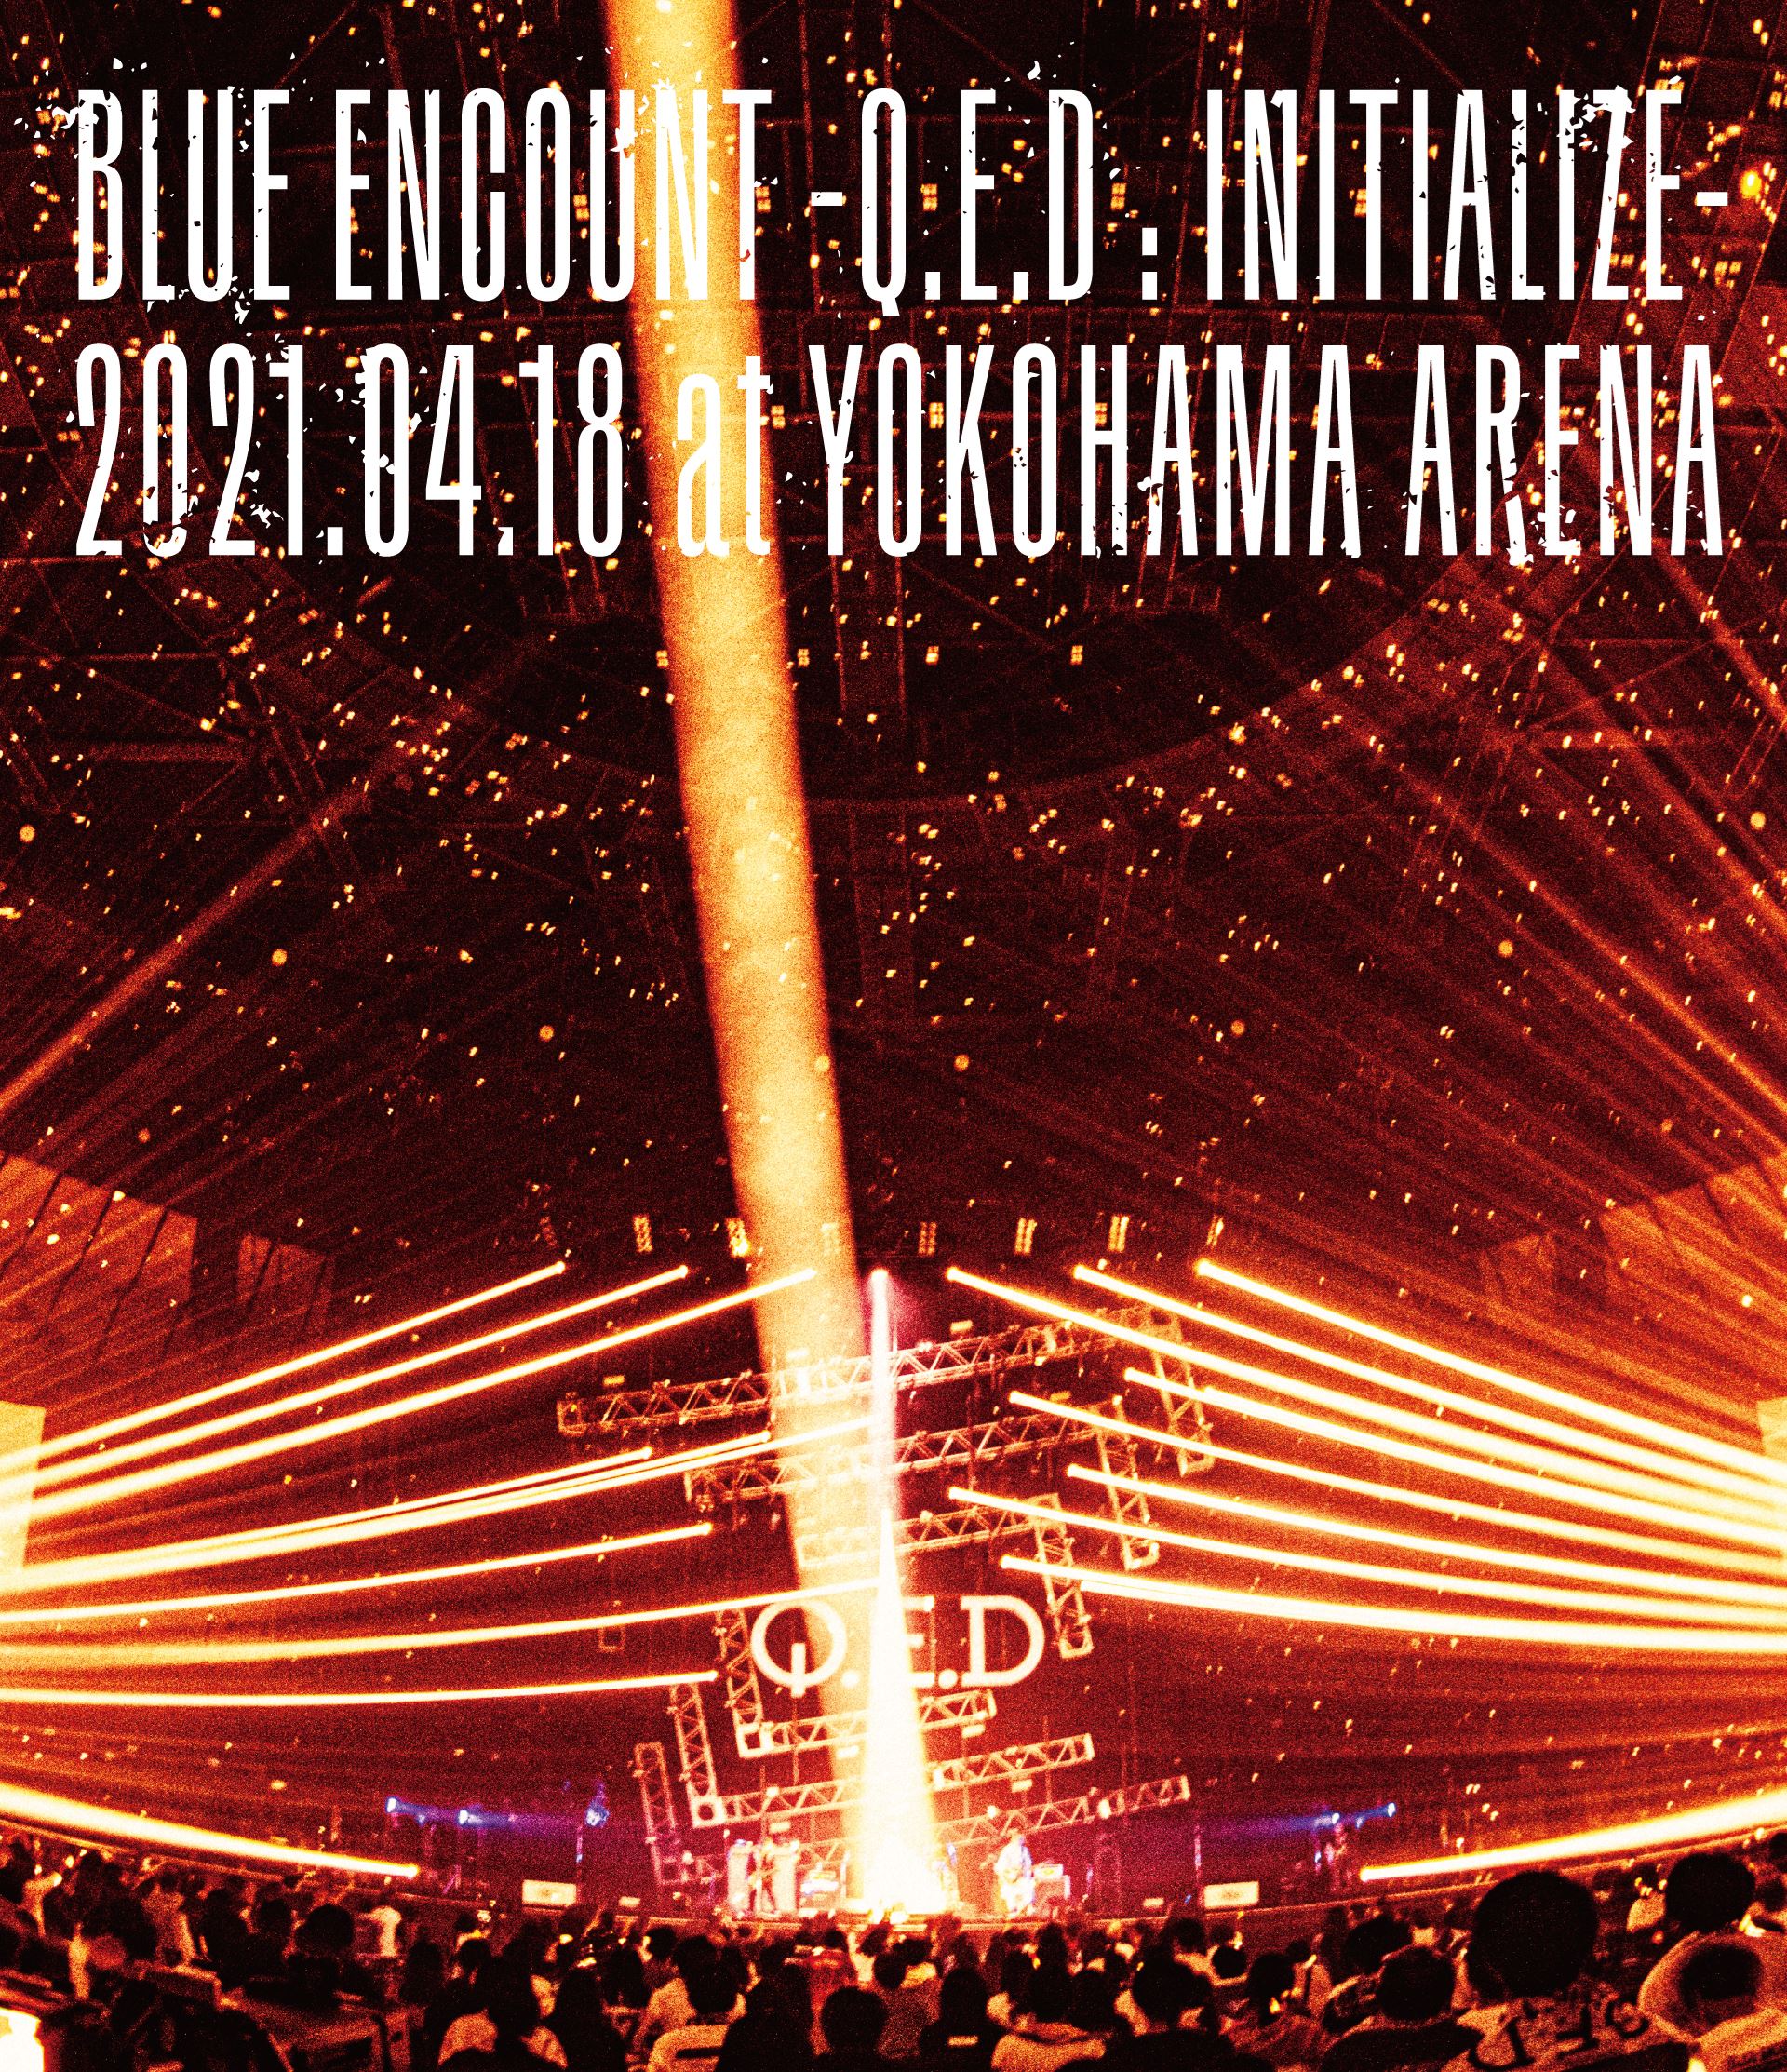 『「BLUE ENCOUNT ～Q.E.D：INITIALIZE～」2021.04.18 at YOKOHAMA ARENA』DVDジャケット